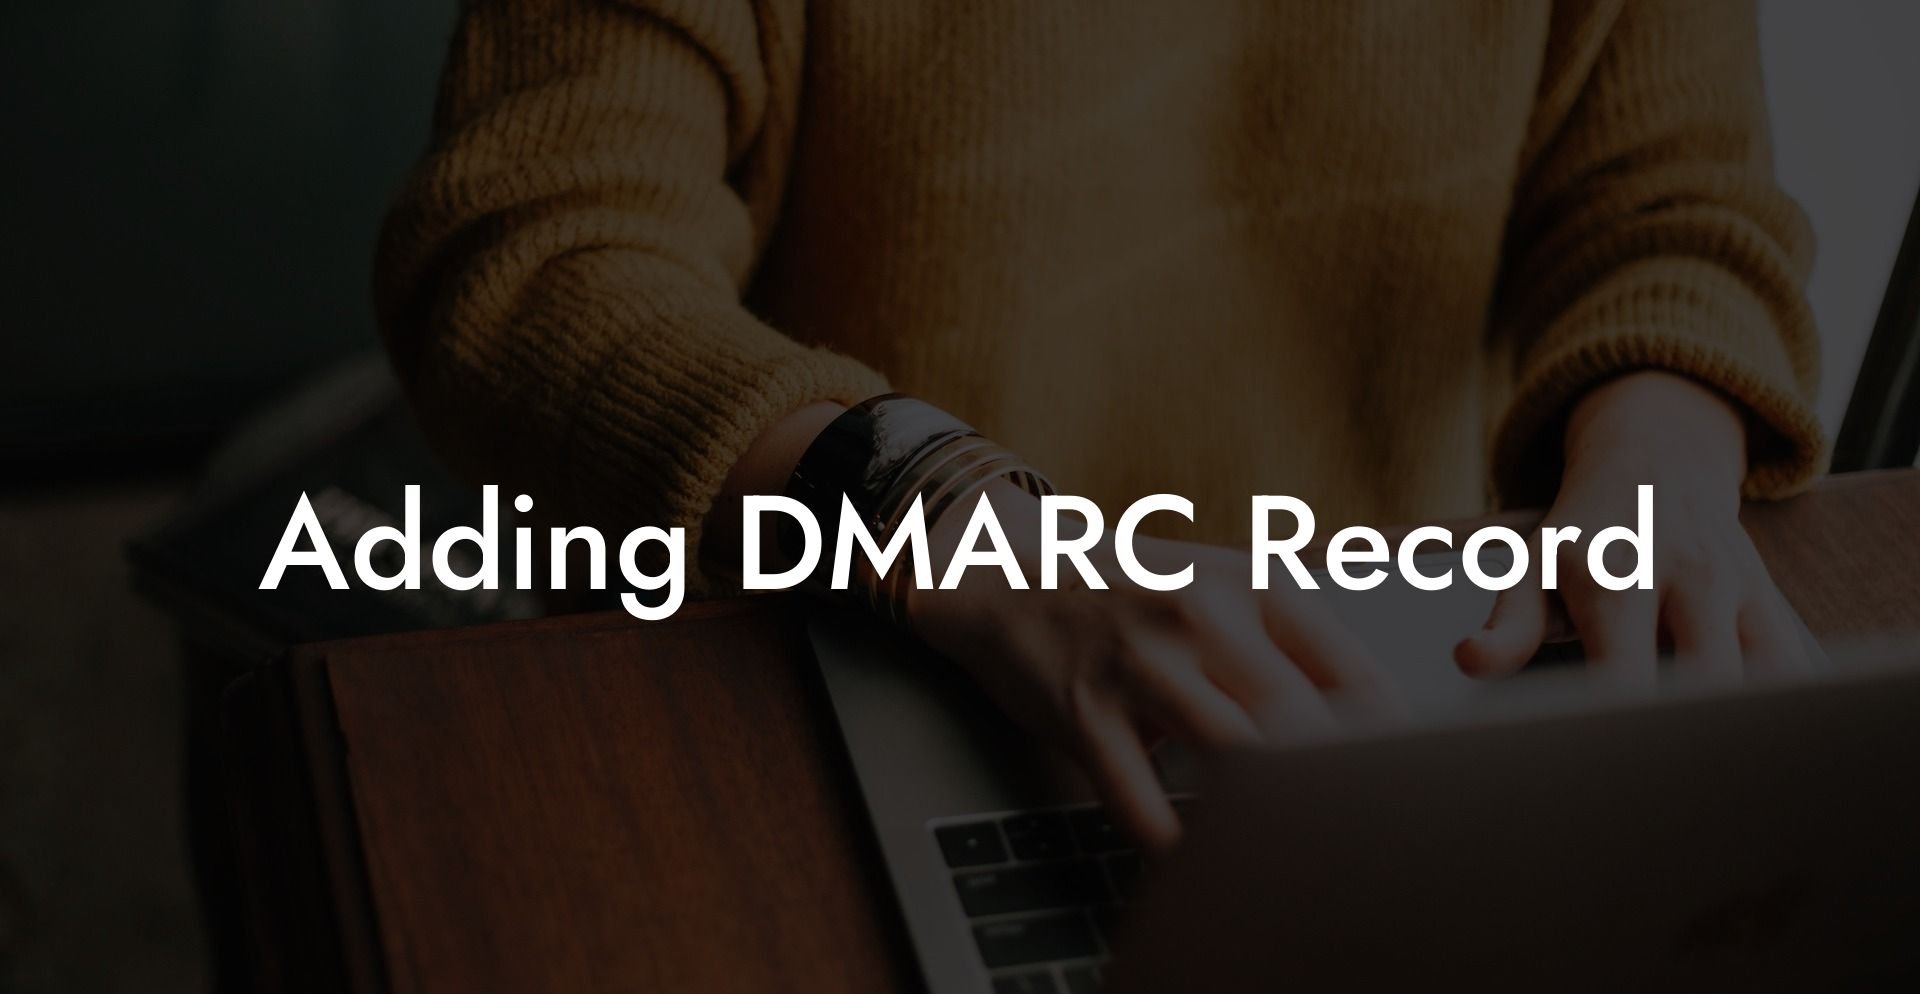 Adding DMARC Record